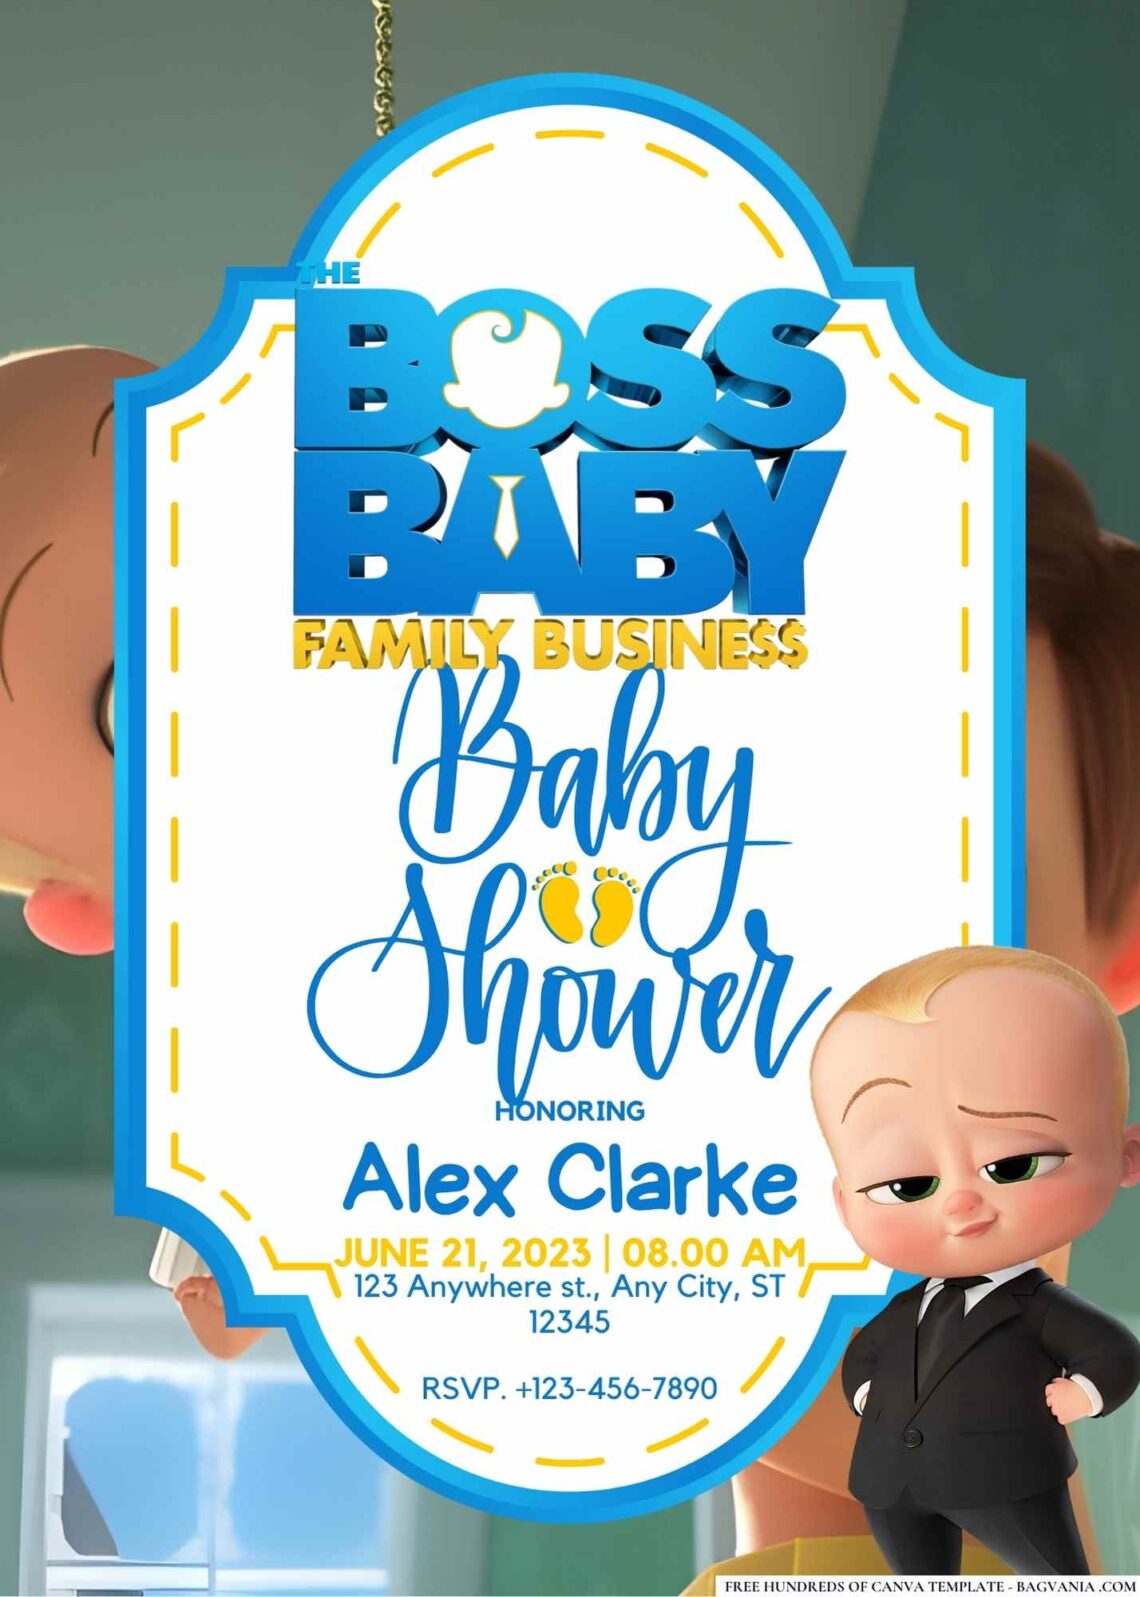 The Boss Baby Baby Shower Invitation